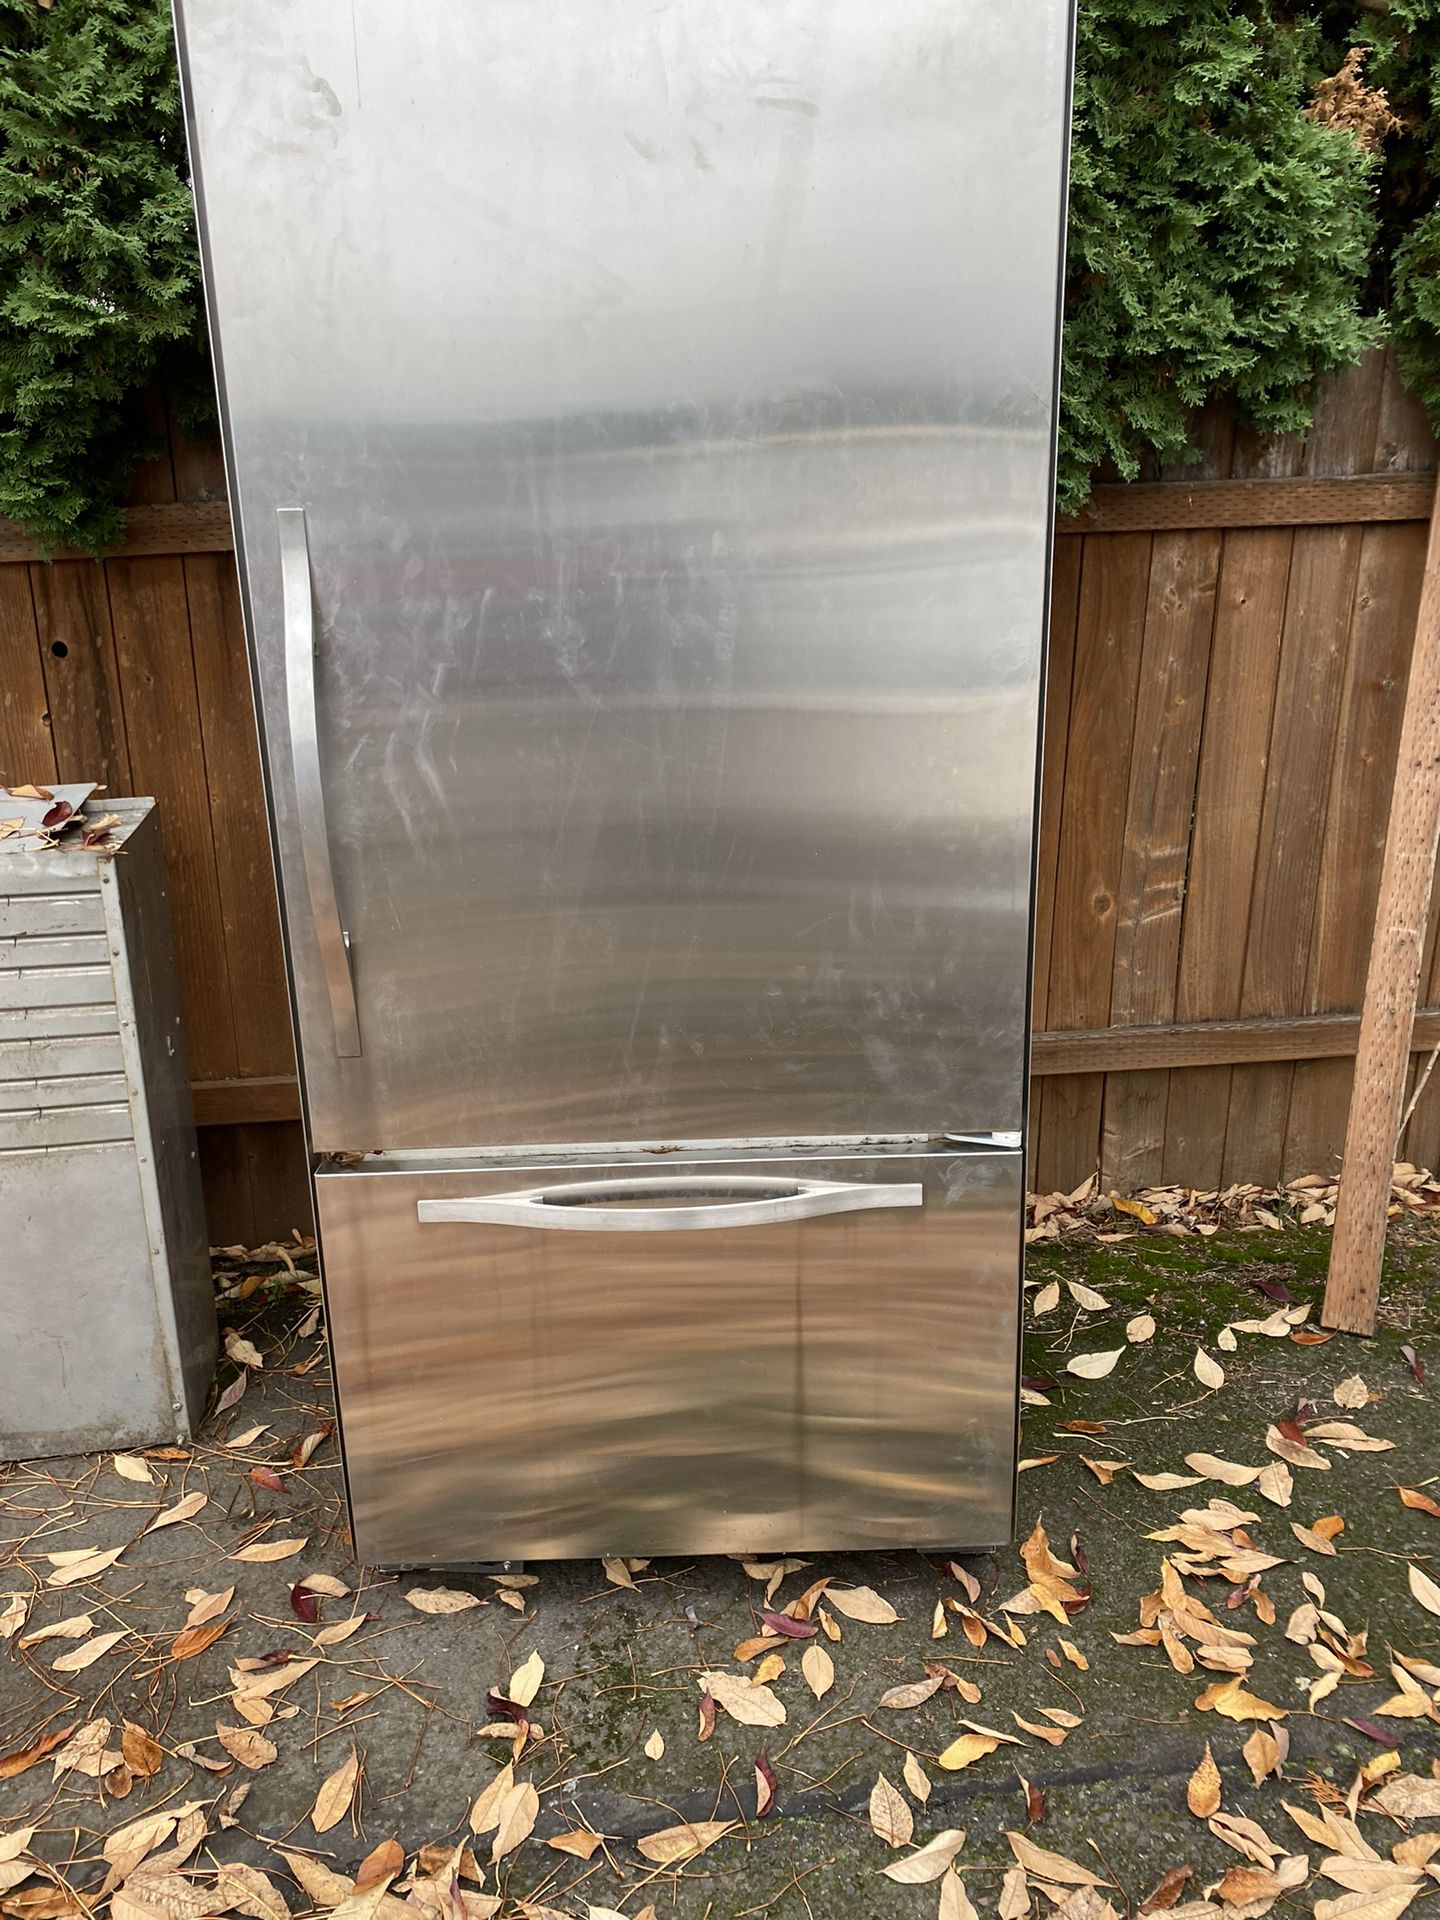 Viking Refrigerator 